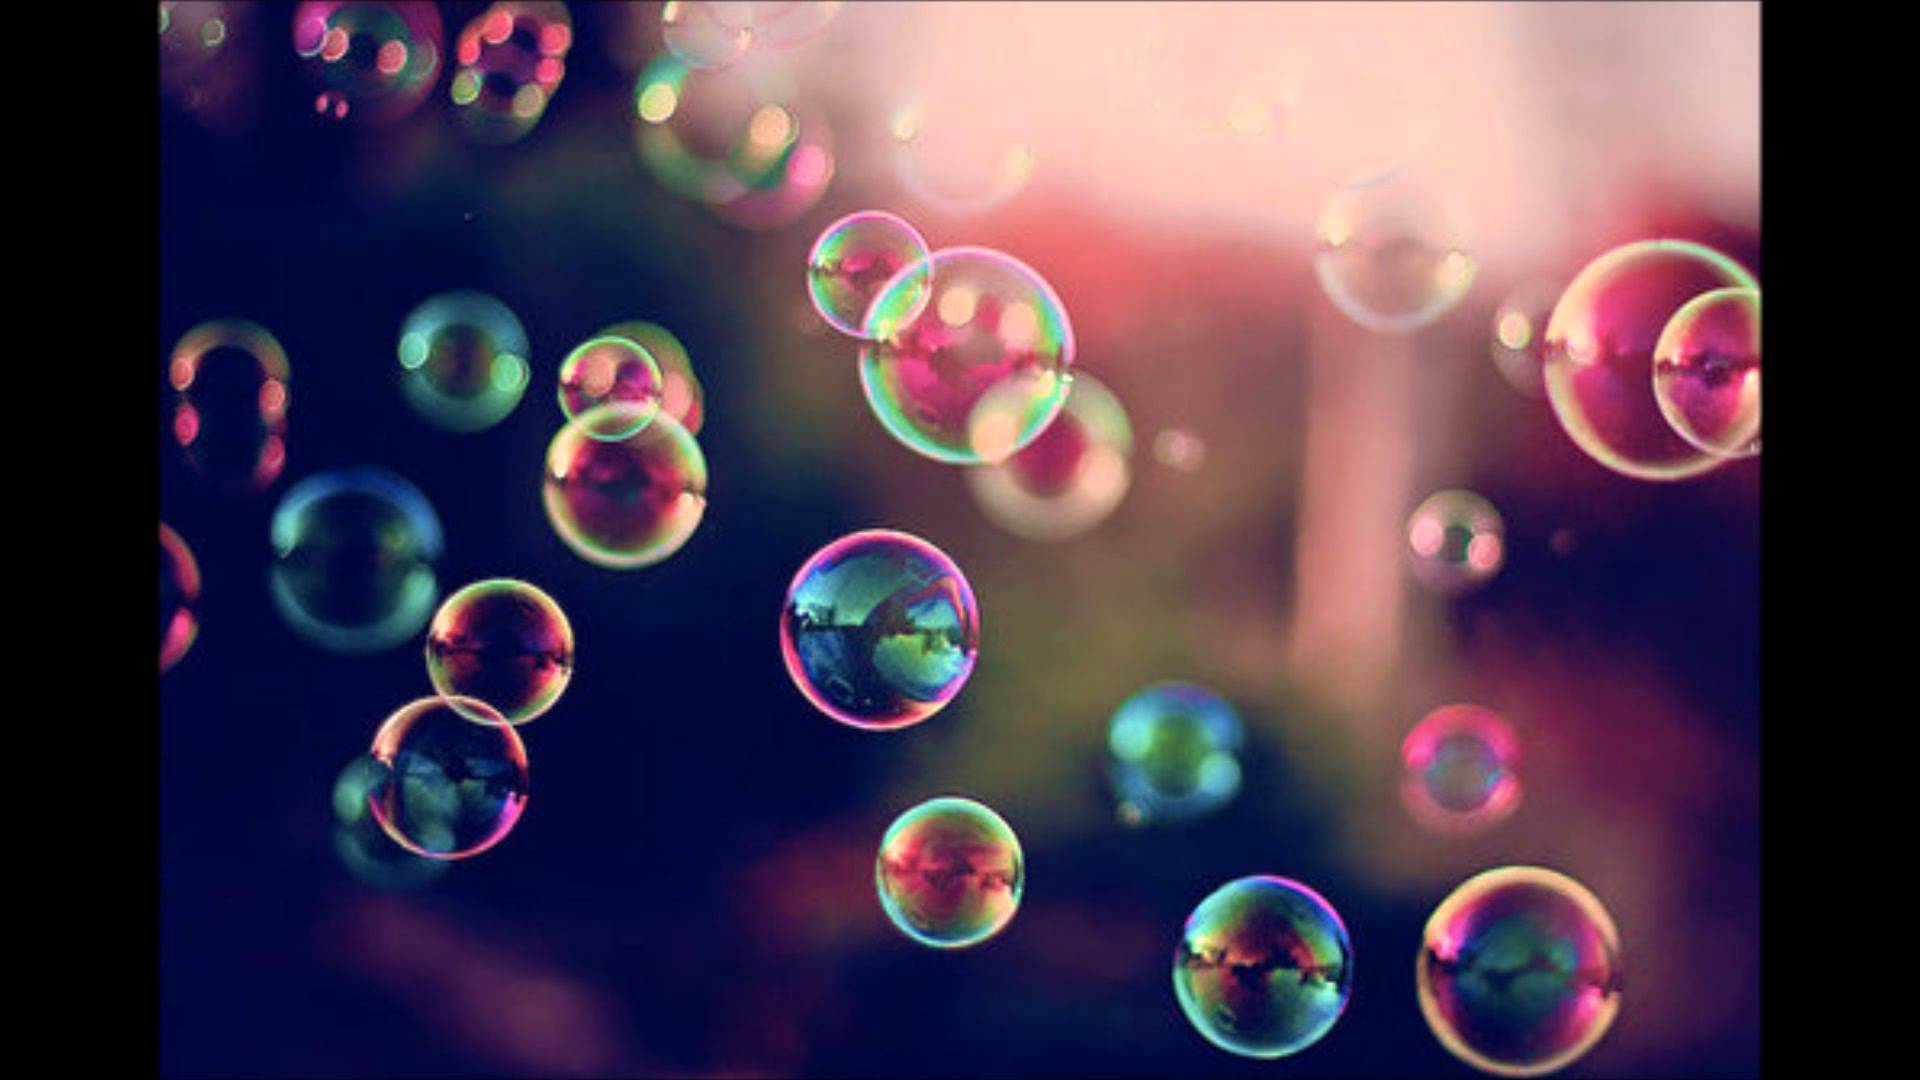 Spring Bubbles